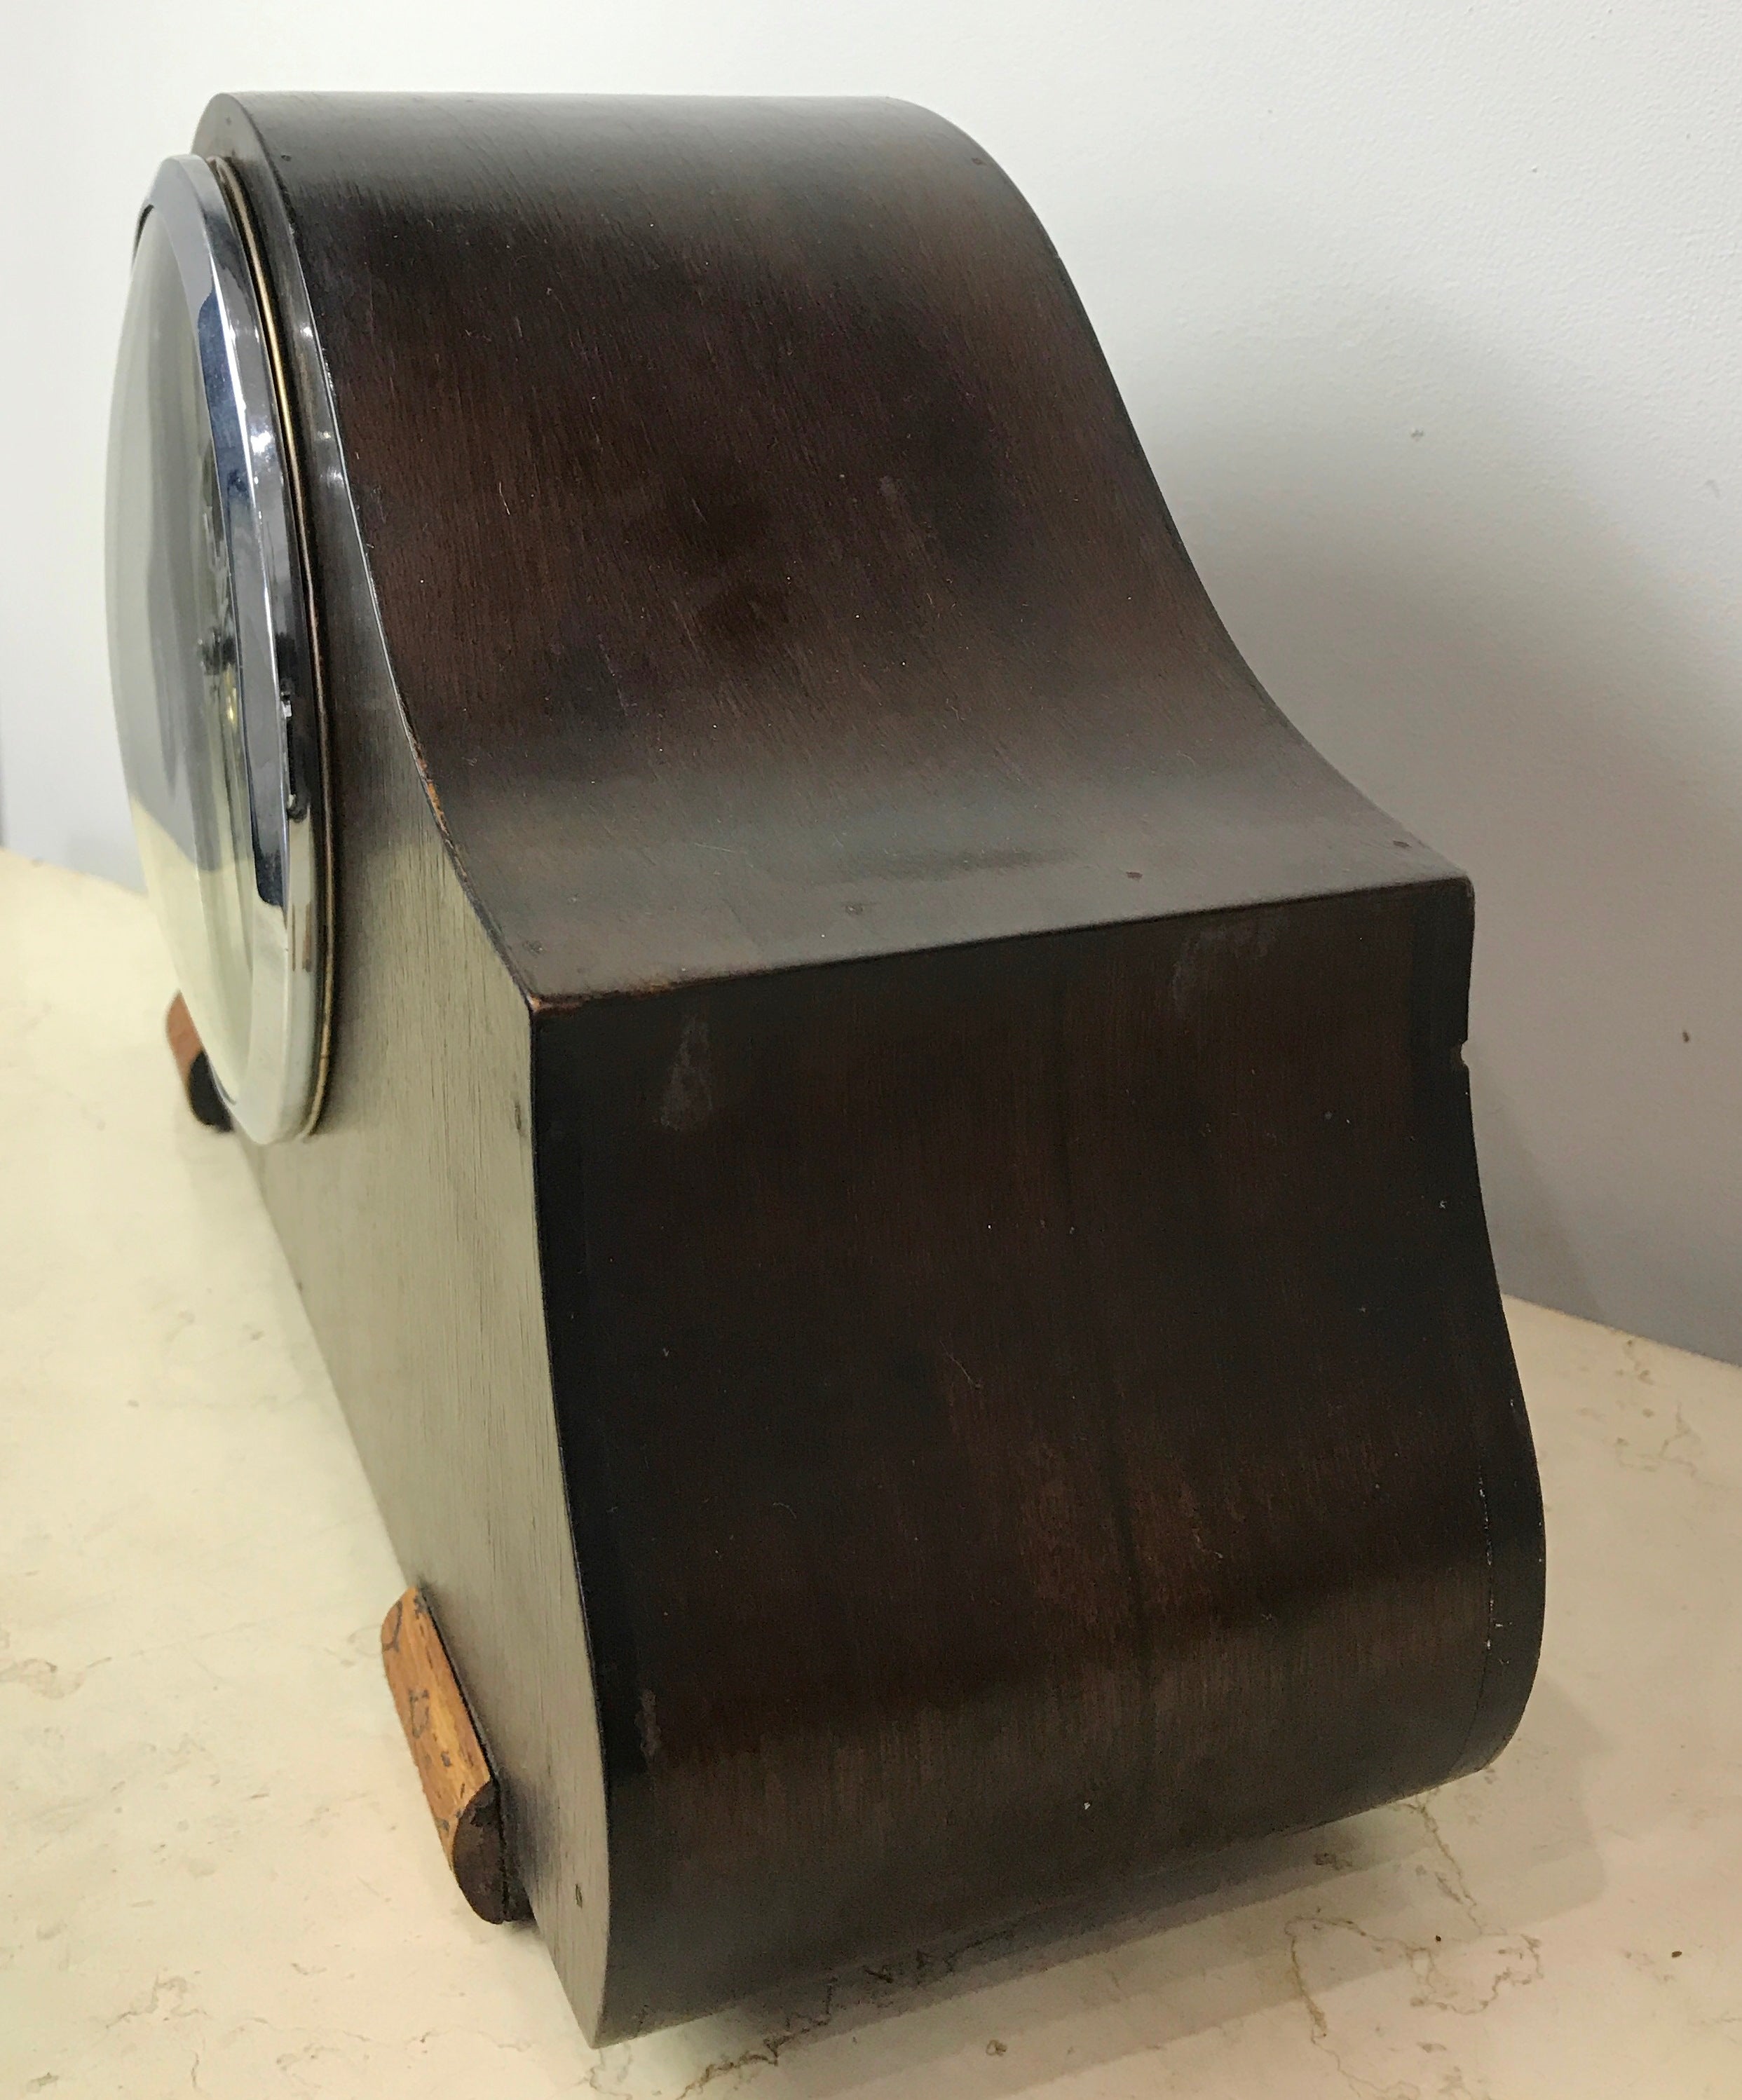 Vintage Enfield Mantel Clock | eXibit collection